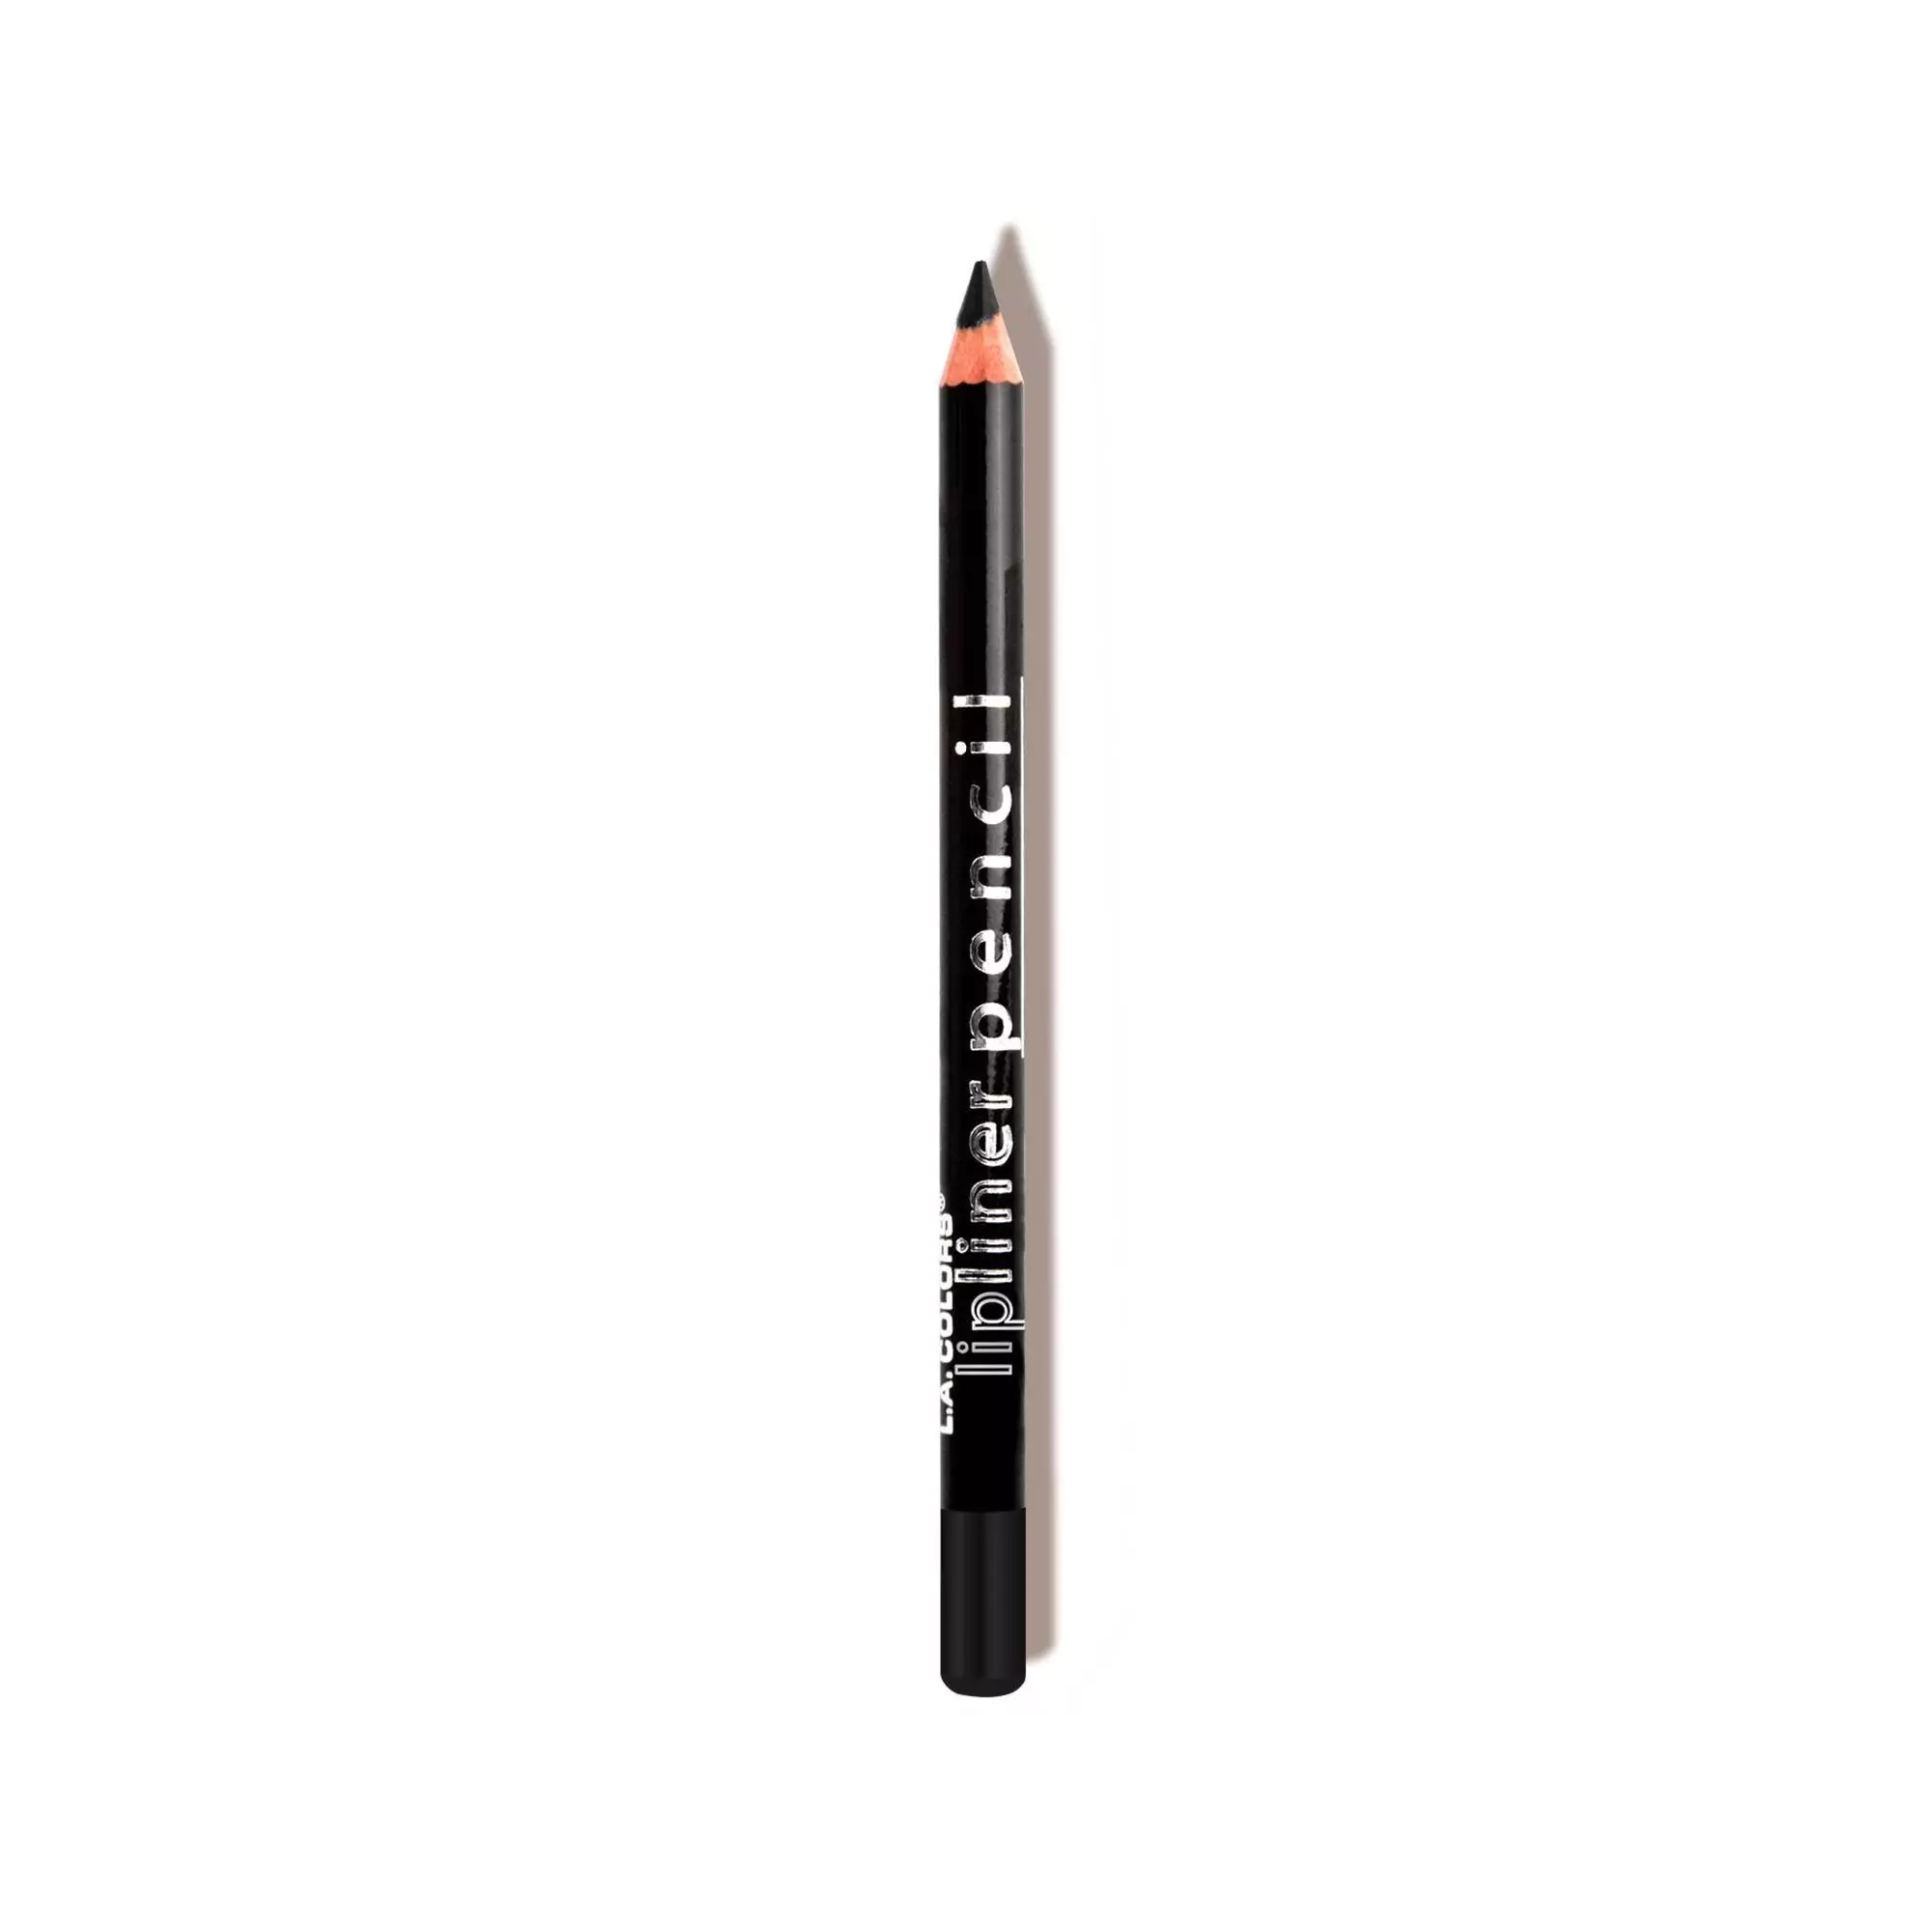 L.A. Colors Lipliner Pencil in Black Discounts and Cashback